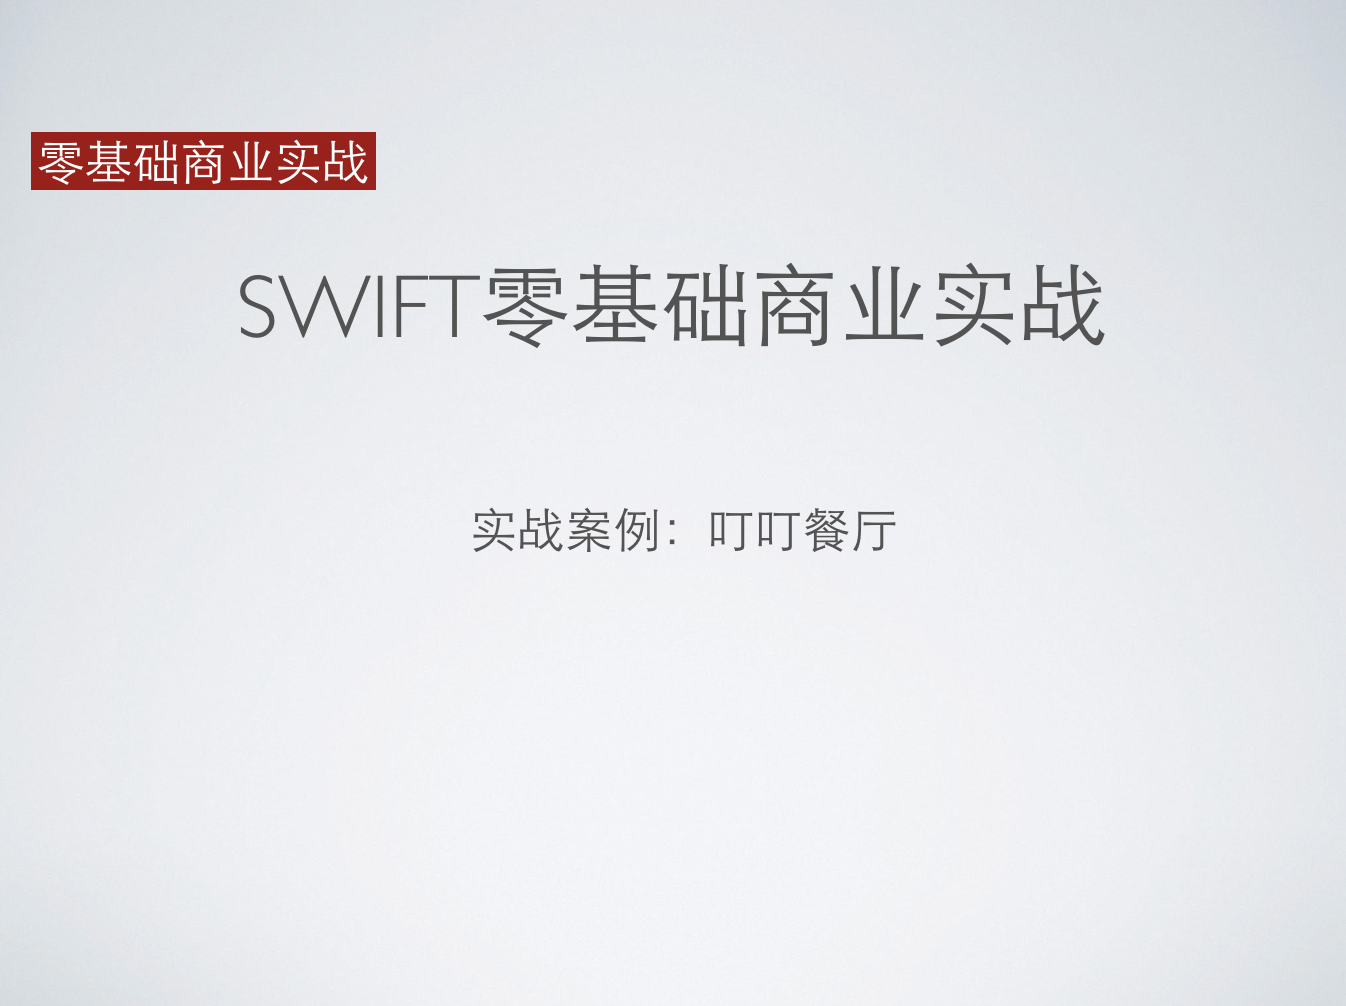 iOS8零基础商业实战基于Swift-Xcode7视频课程